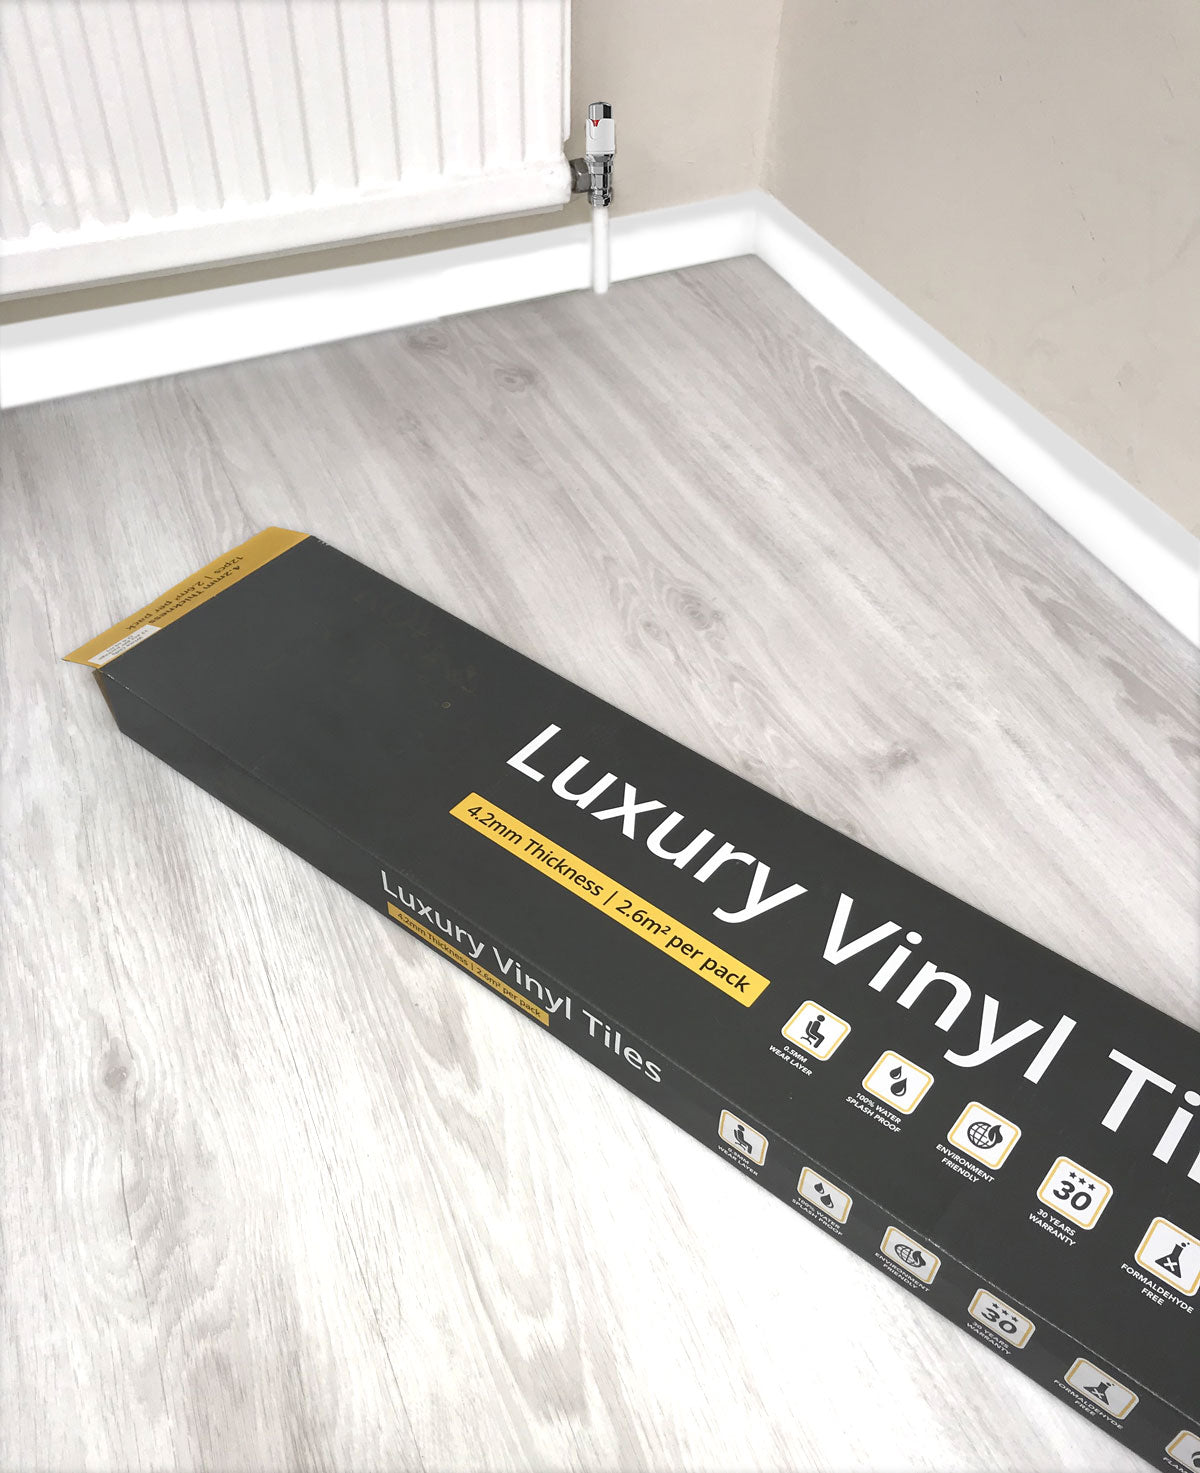 White LVT Vinyl Click Plank Flooring - 4.2mm Thick - Water Resistance